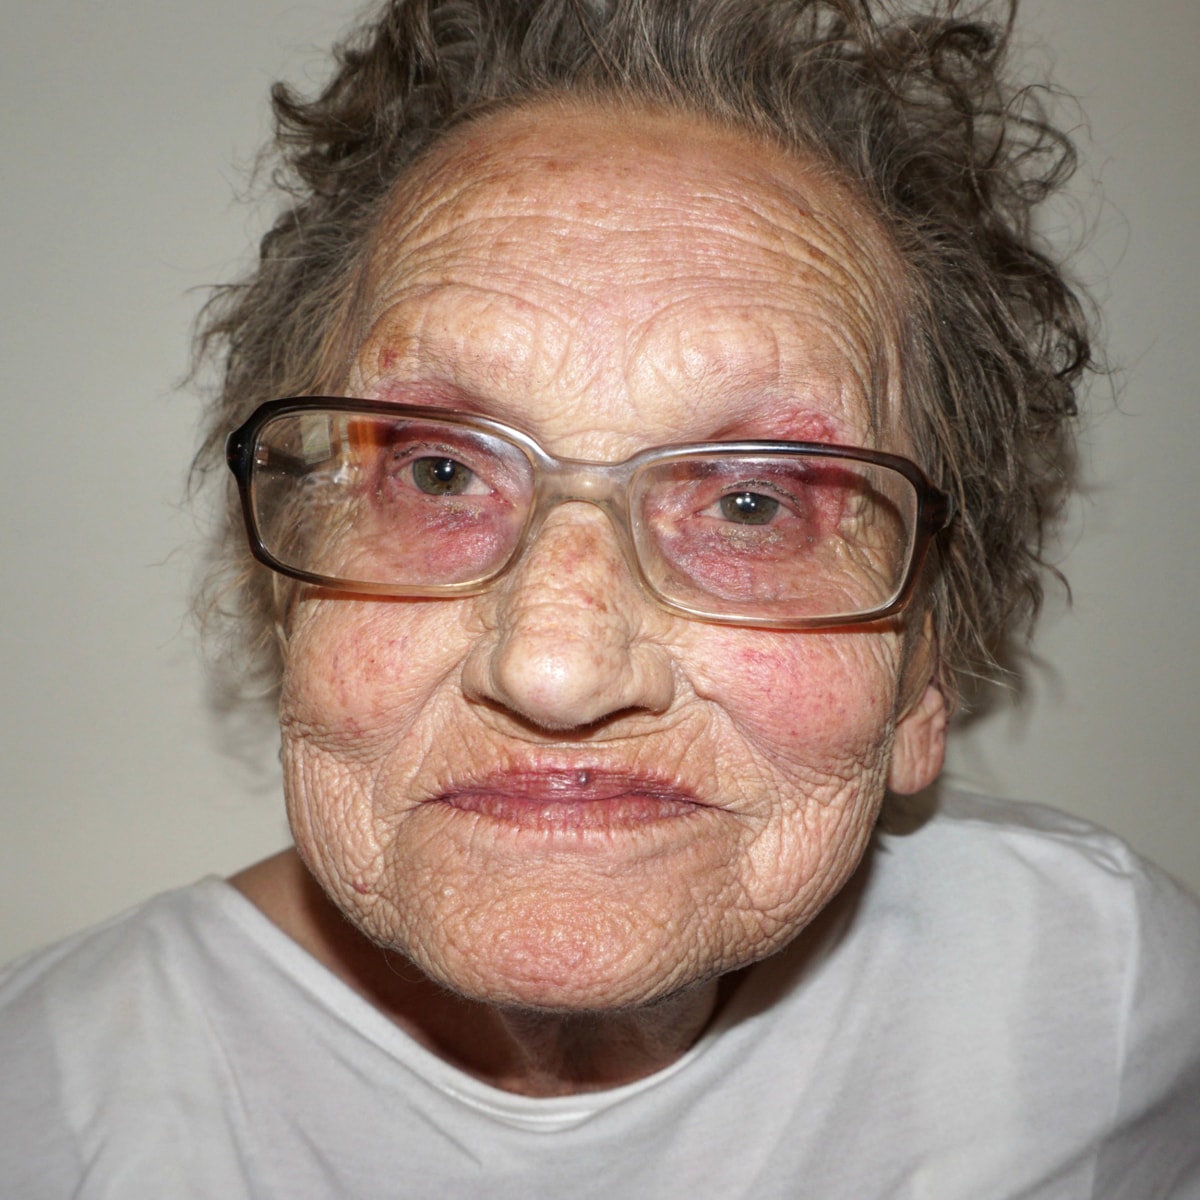 Tea Flegos Grandma Livia Gets An Incredible Makeup Transformation 